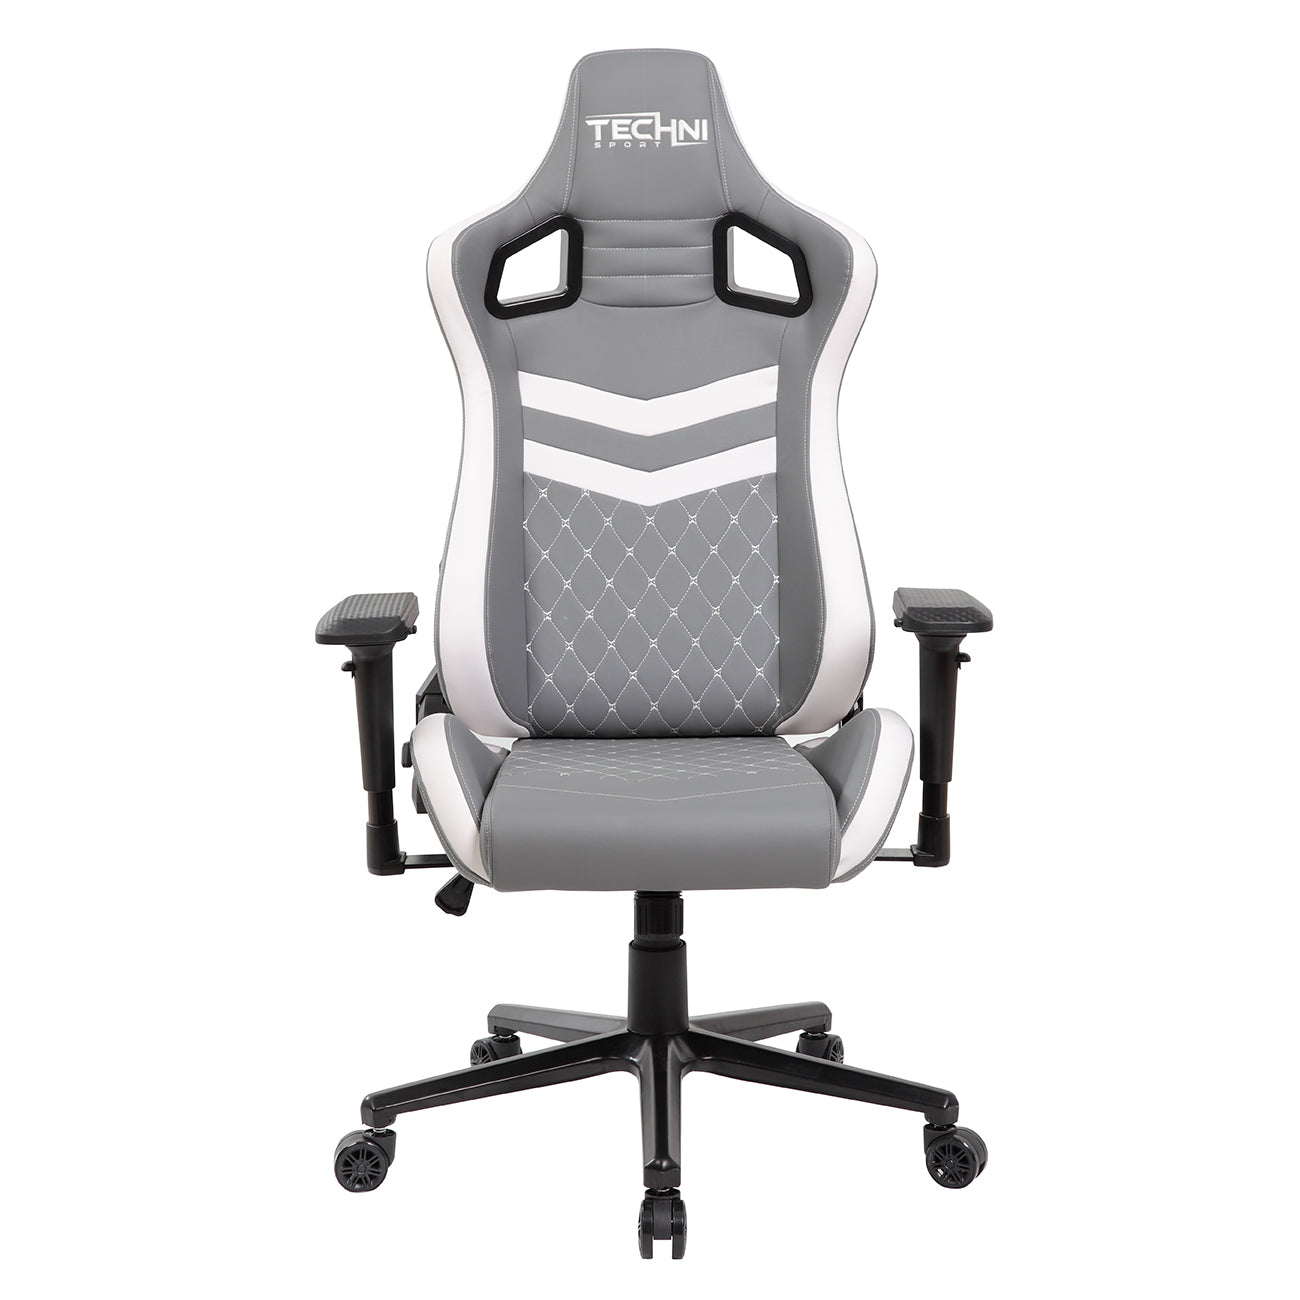 Techni Sport TS-83 Ergonomic High Back Racer Style PC Gaming Chair, Grey/White